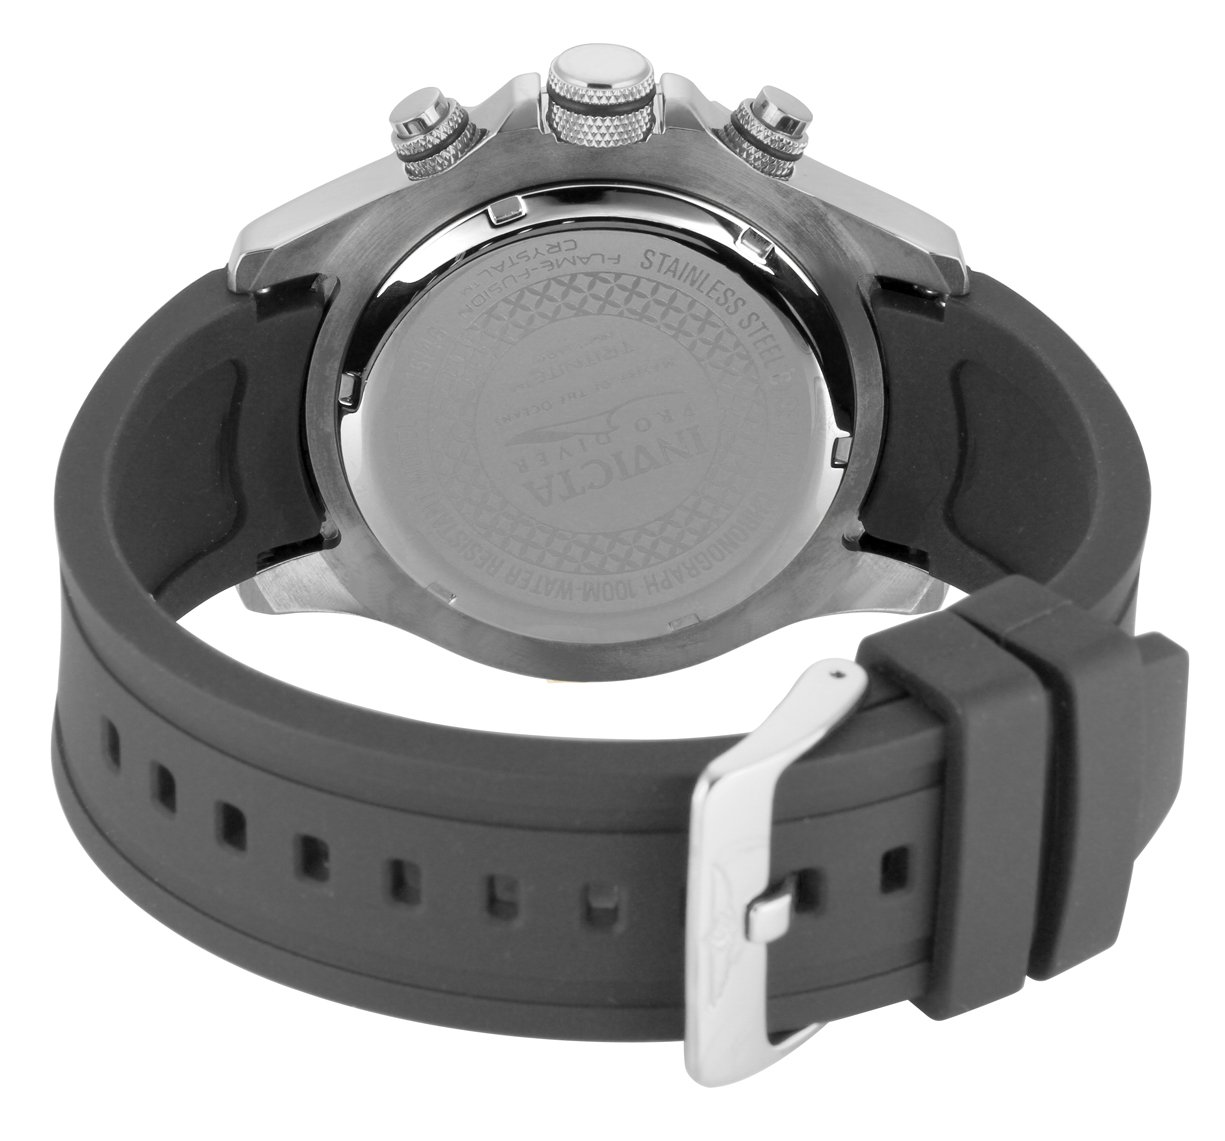 Invicta Men's Pro Diver 48mm Stainless Steel and Polyurethane Chronograph Quartz Watch, Black (Model: 15145, 13730, 13729)